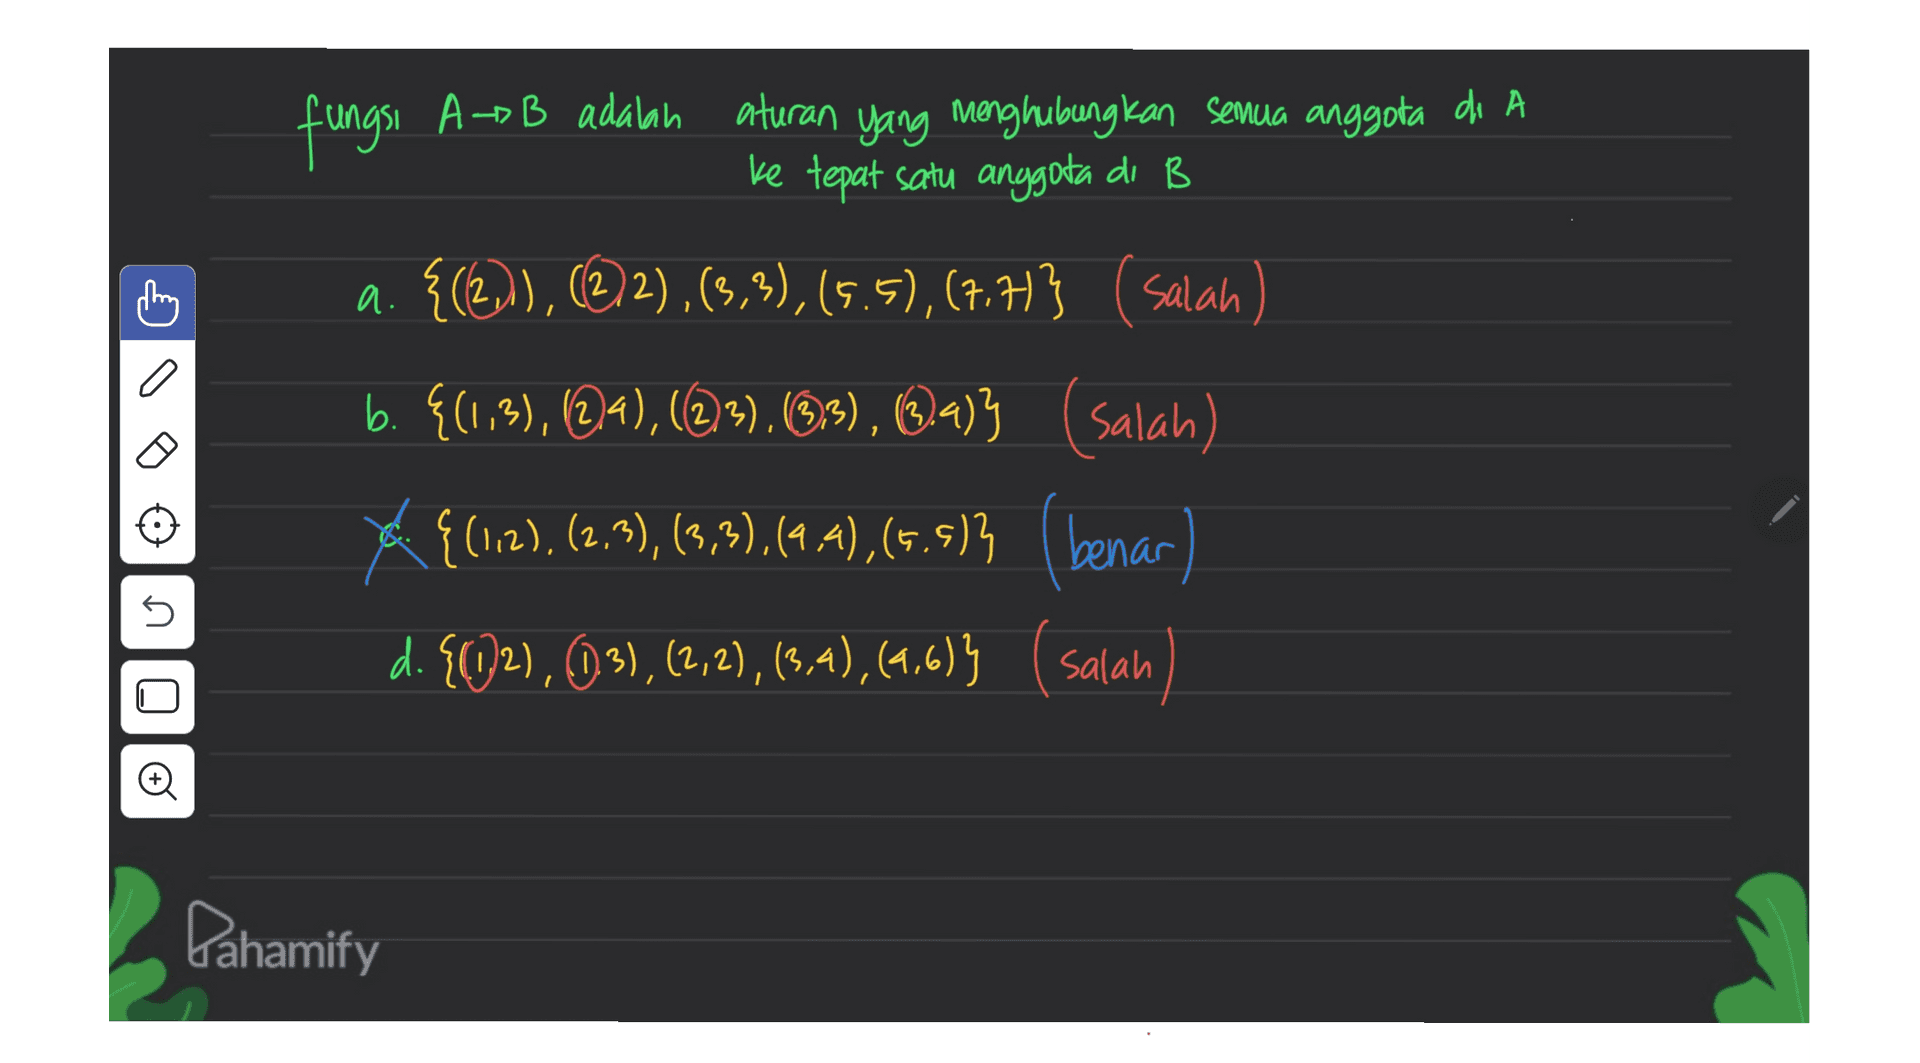 fungsi A-DB adalah aturan yang menghubungkan semua anggota di A ke tepat satu anggota di B a. {(2)), (272),(3,3),(5.5), (7.71} ( salah ) 2 6 ((Salah) b. {(1,3), 24),(2,3), (3), (3,4)} {(1,2), (2,3), (3,3),(4,4), (5.5)3 benar d. {C)2), (03),(2,2),(3,4),(4,613 (salan) )) s Pahamify 